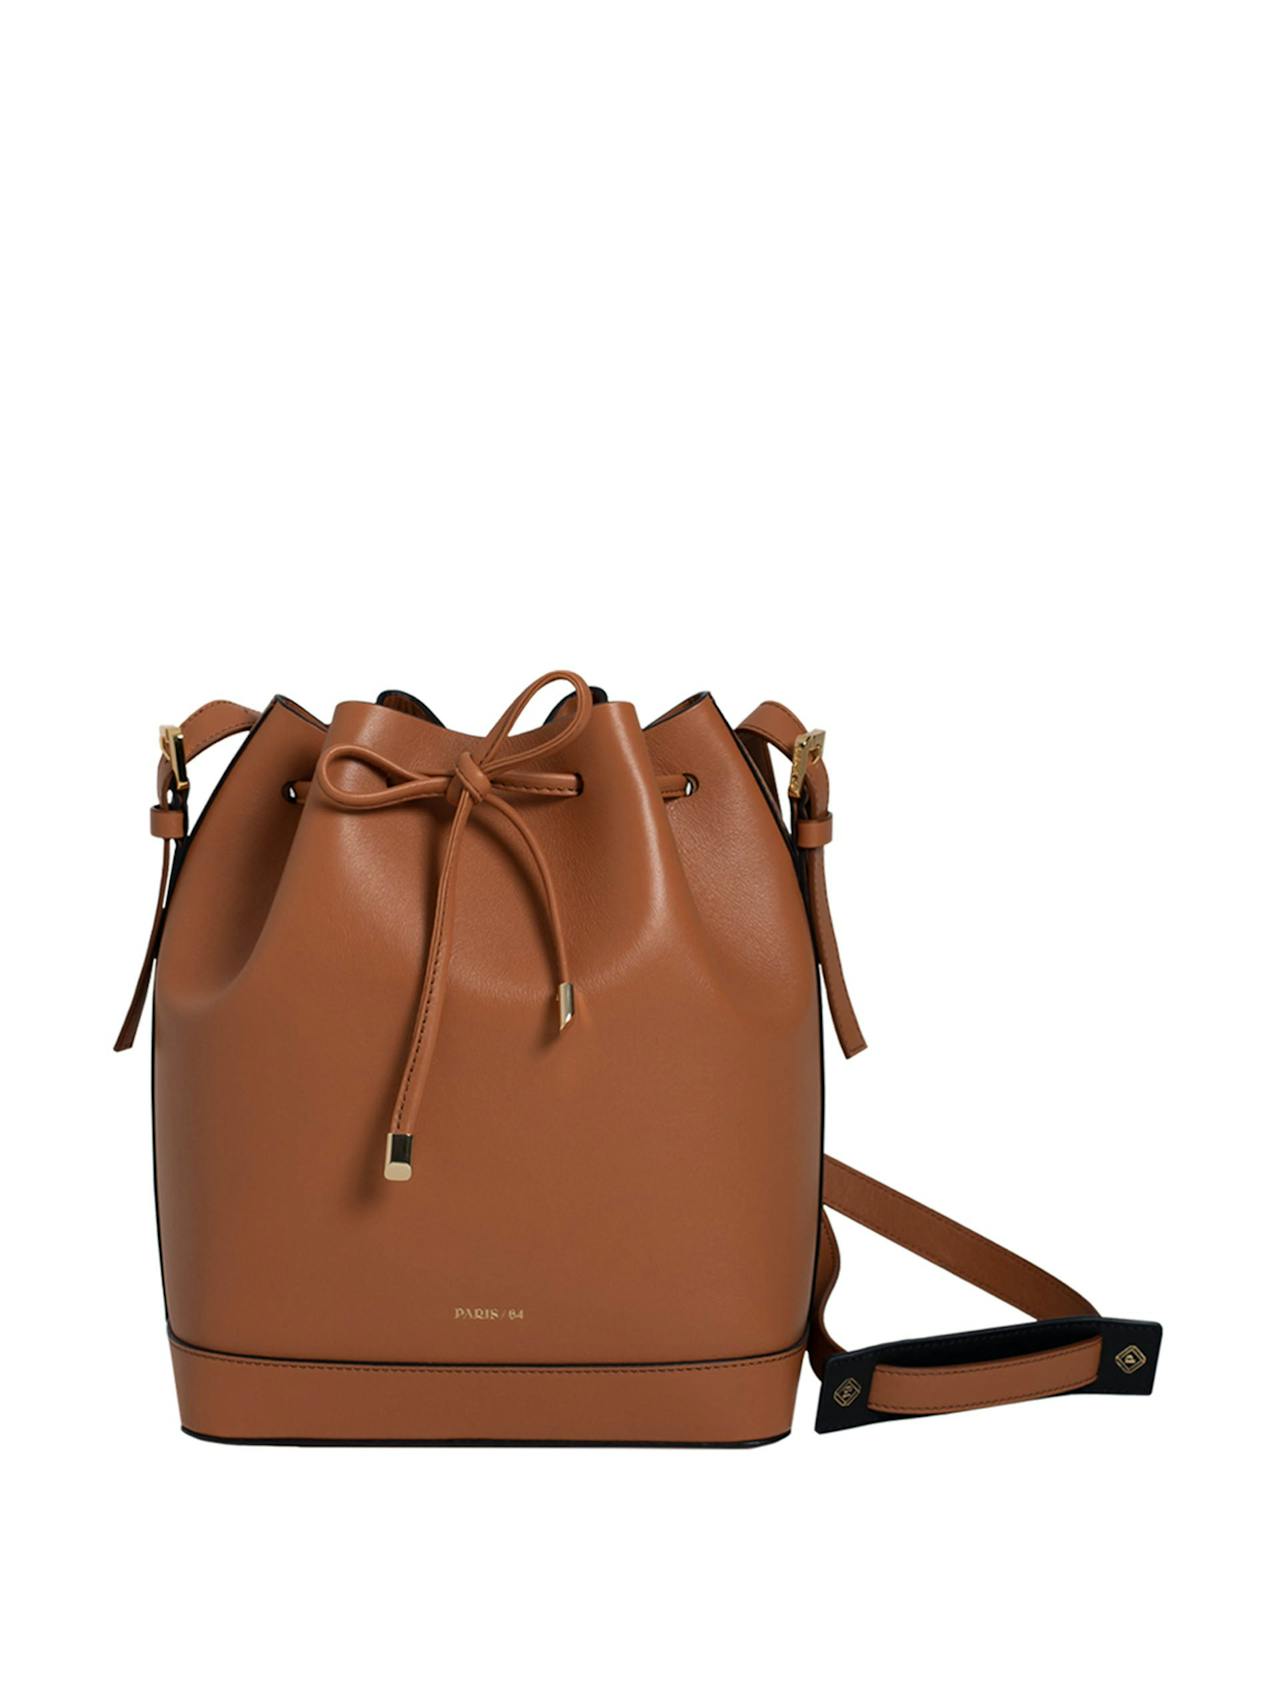 Mini Always Caramel leather bag